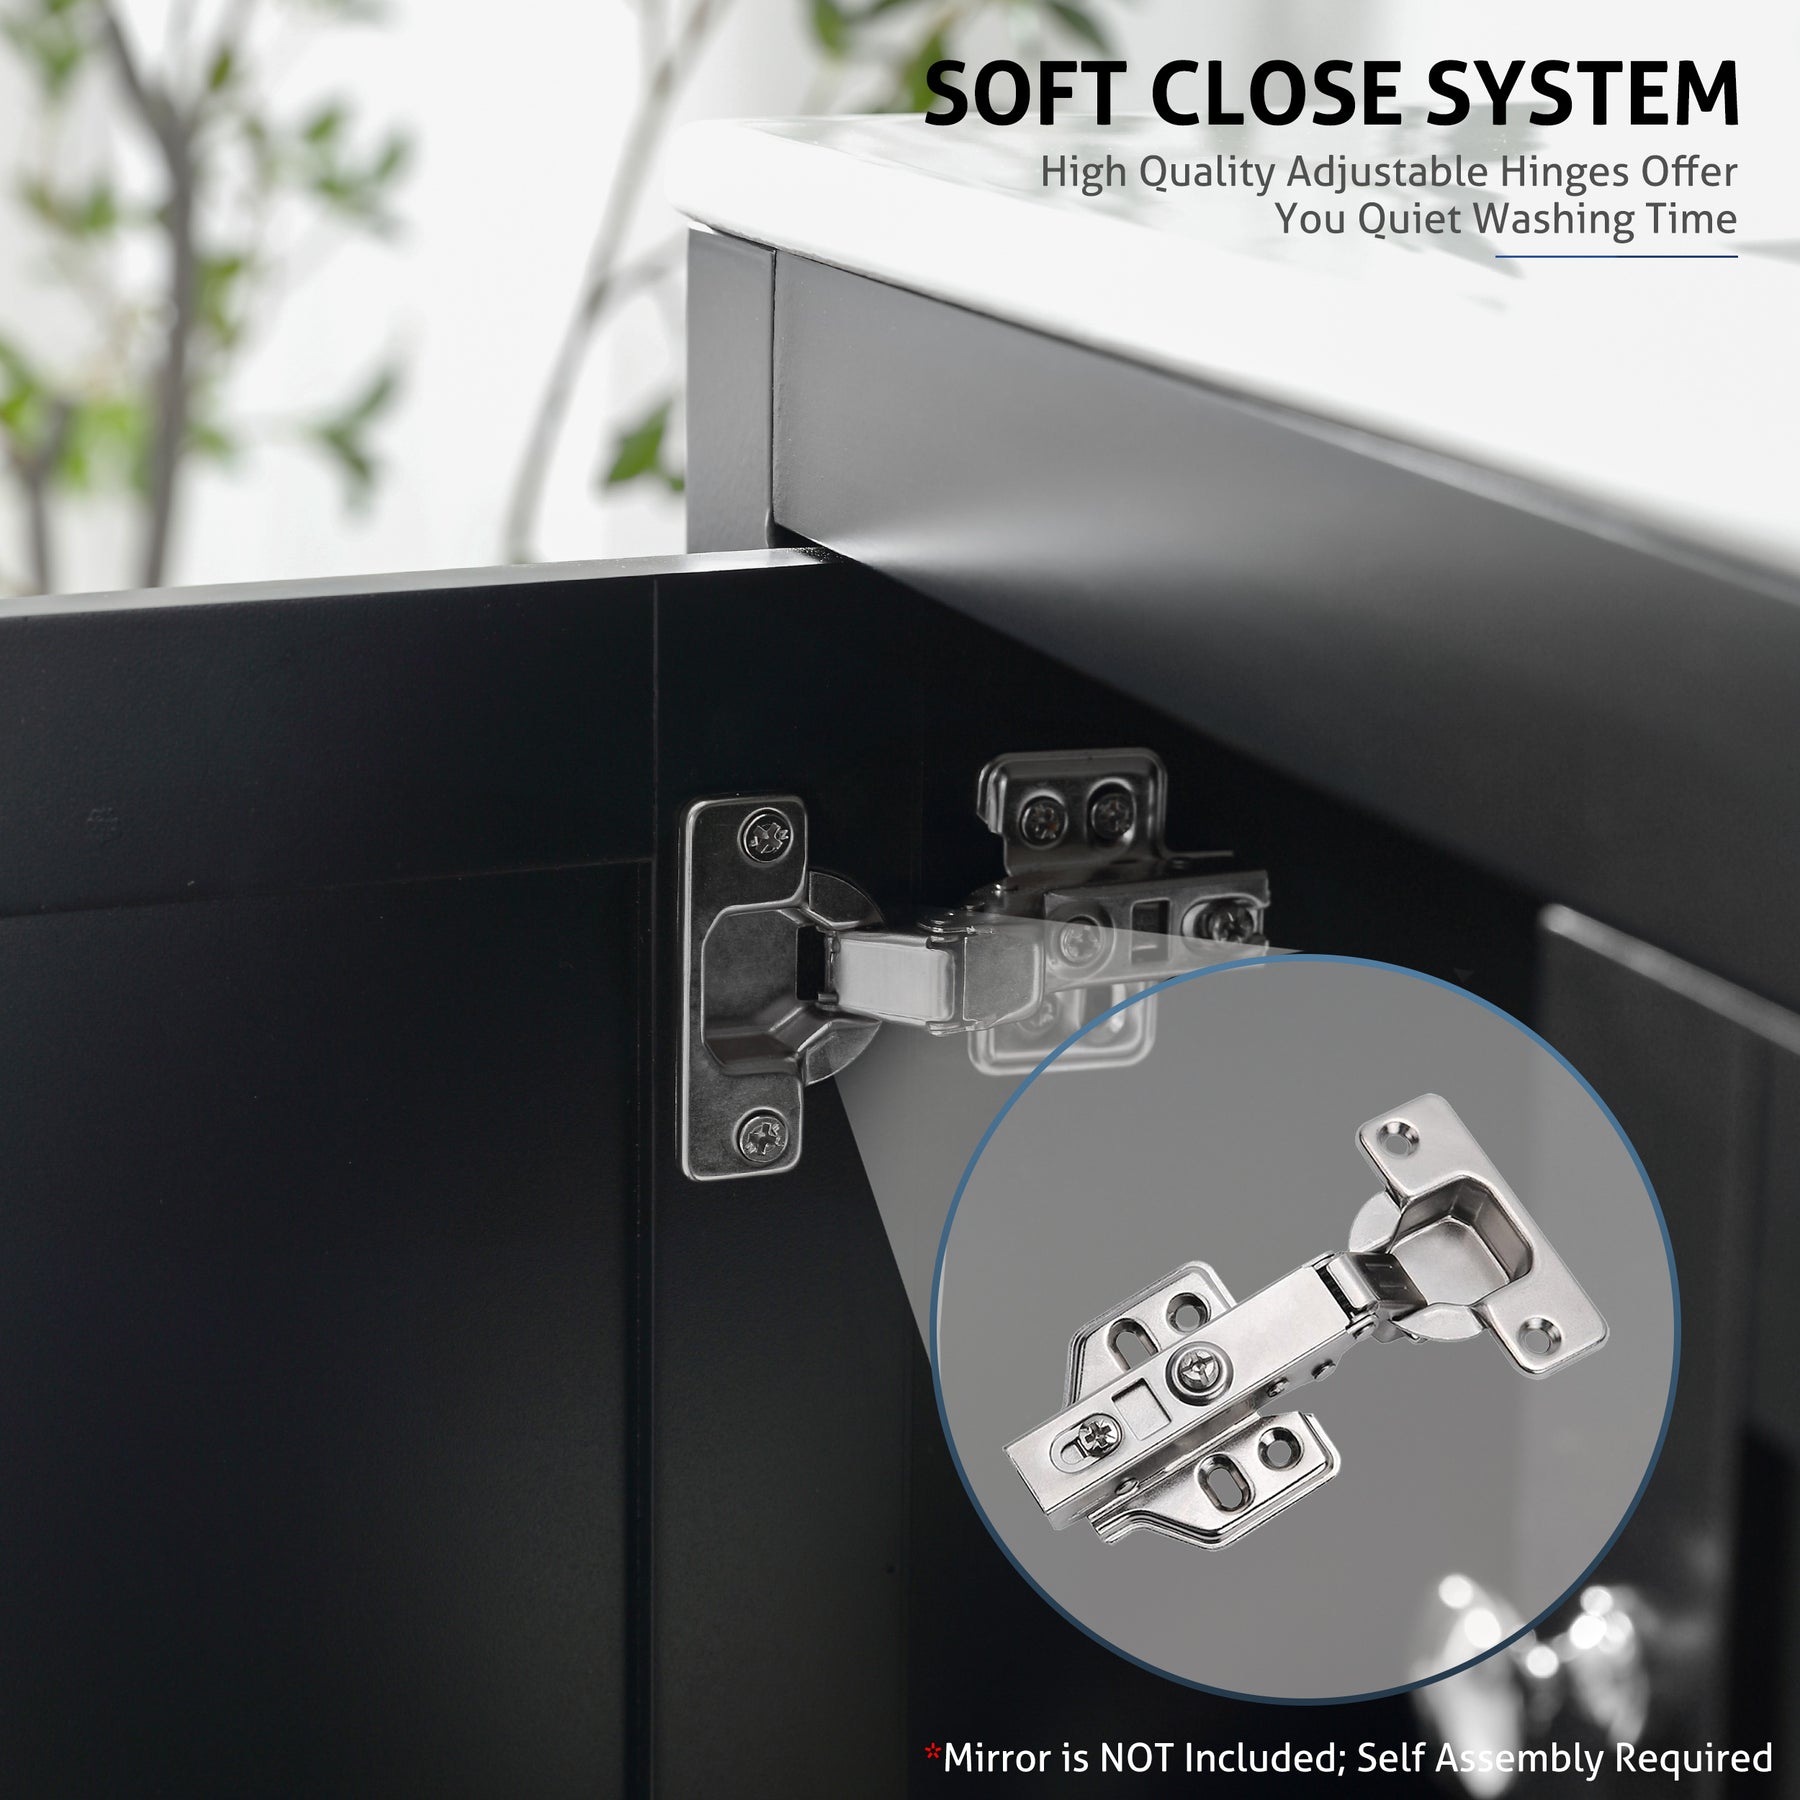 Outlet 36" Freestanding Bathroom Vanity Combo with Single Undermount Sink